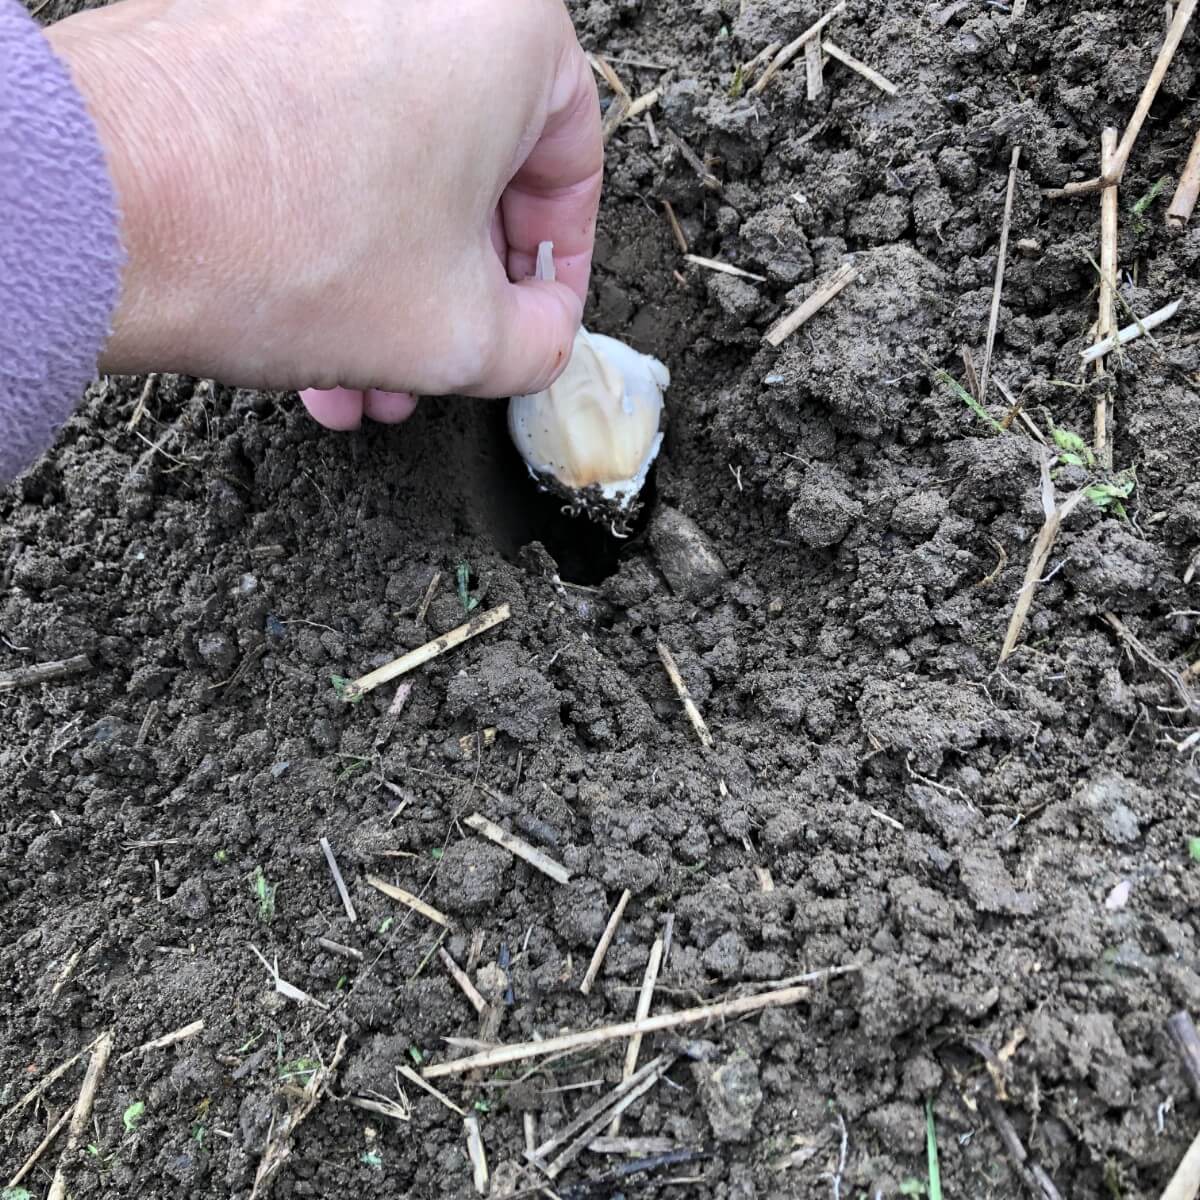 hand planting garlic clove in tilled soil